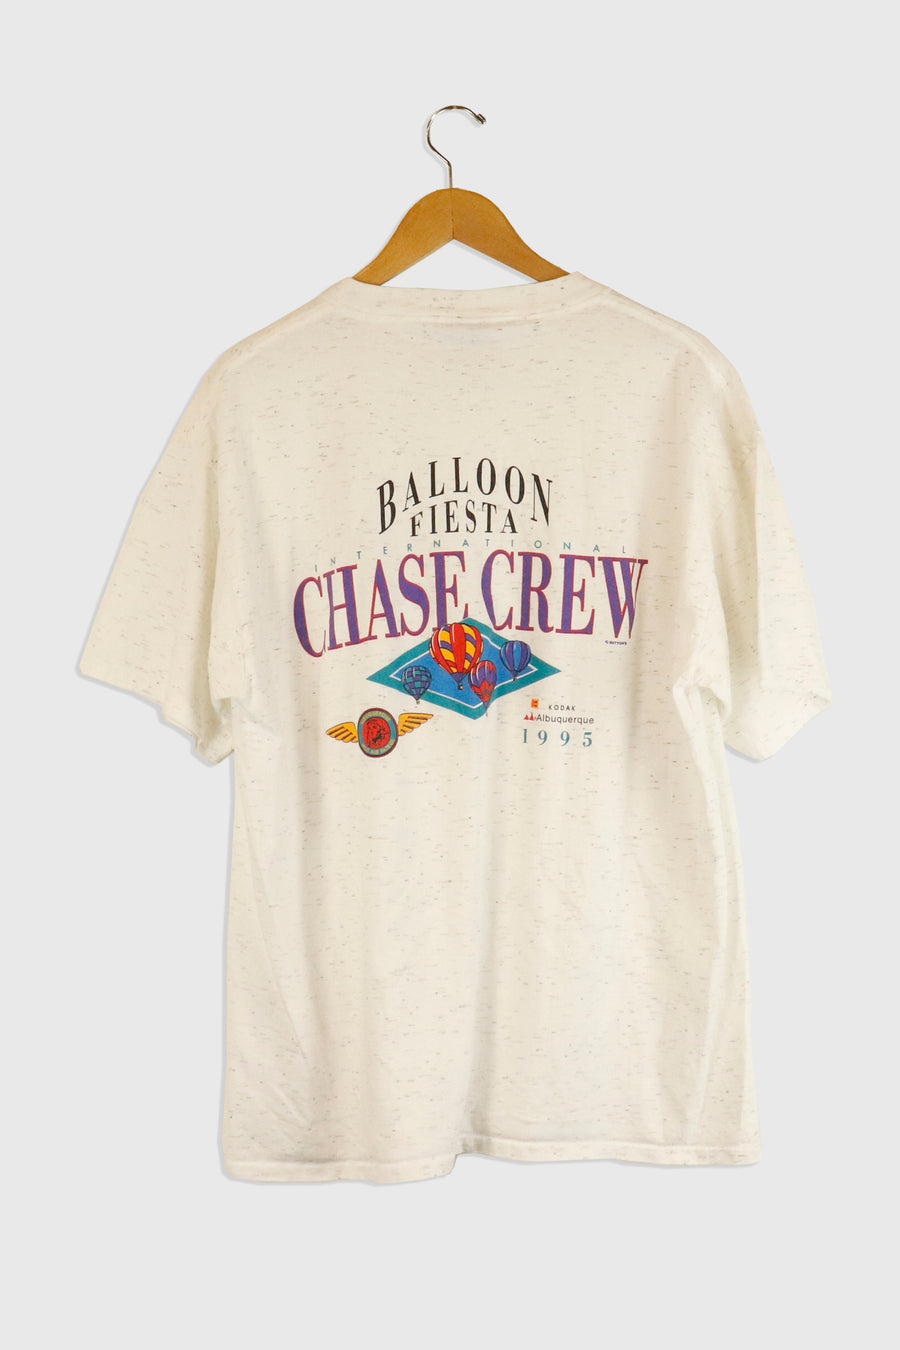 Vintage 1995 Chase Crew Hot Air Balloon T Shirt Sz XL